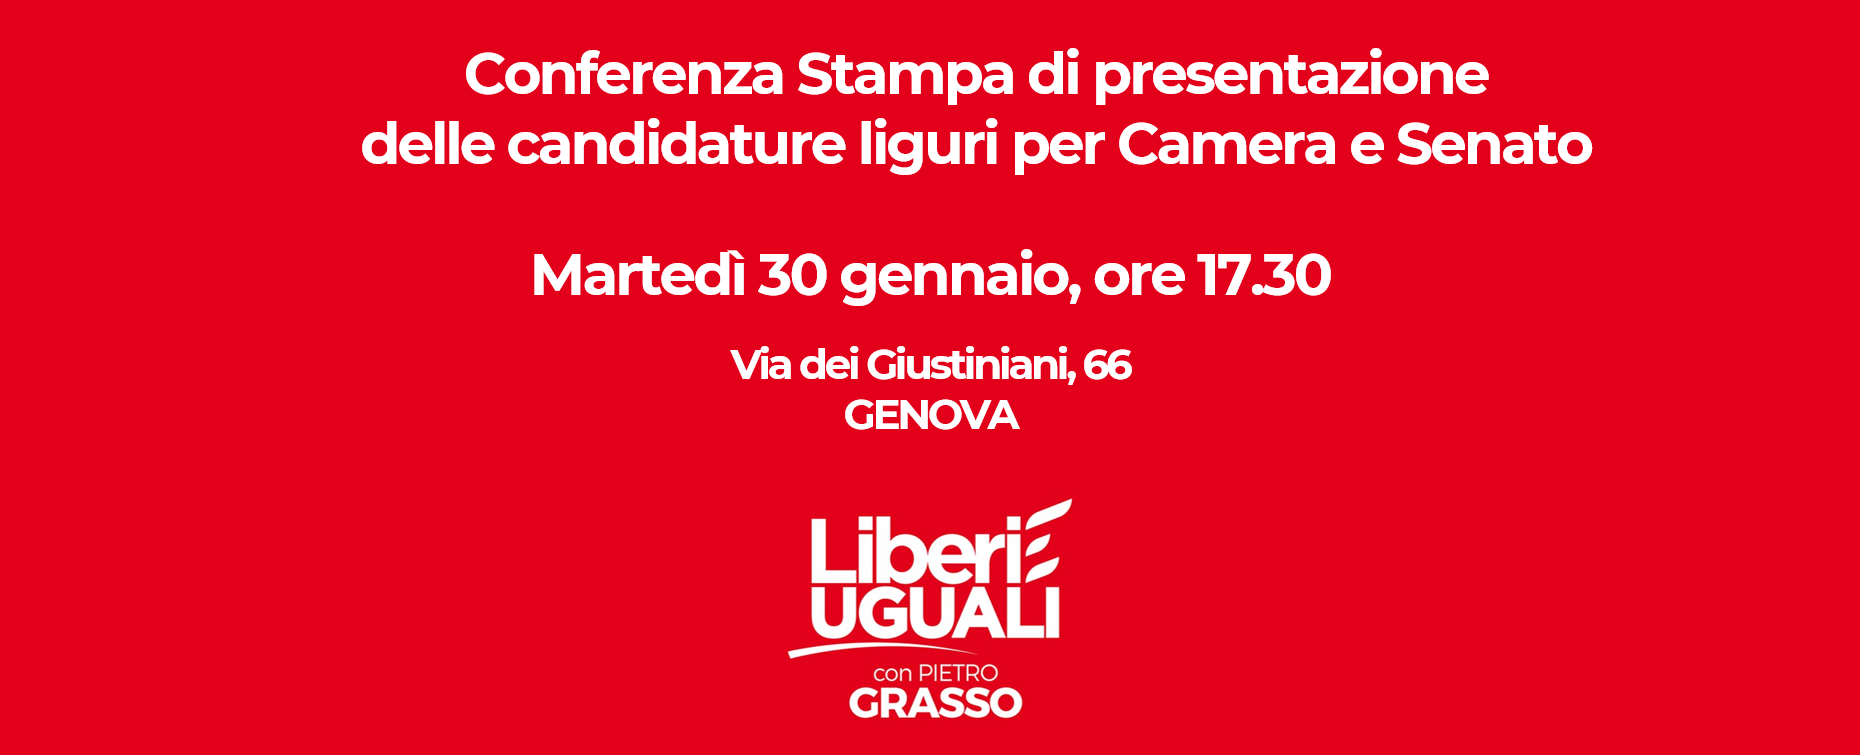 Liberi e Uguali Liguria - Conferenza Stampa